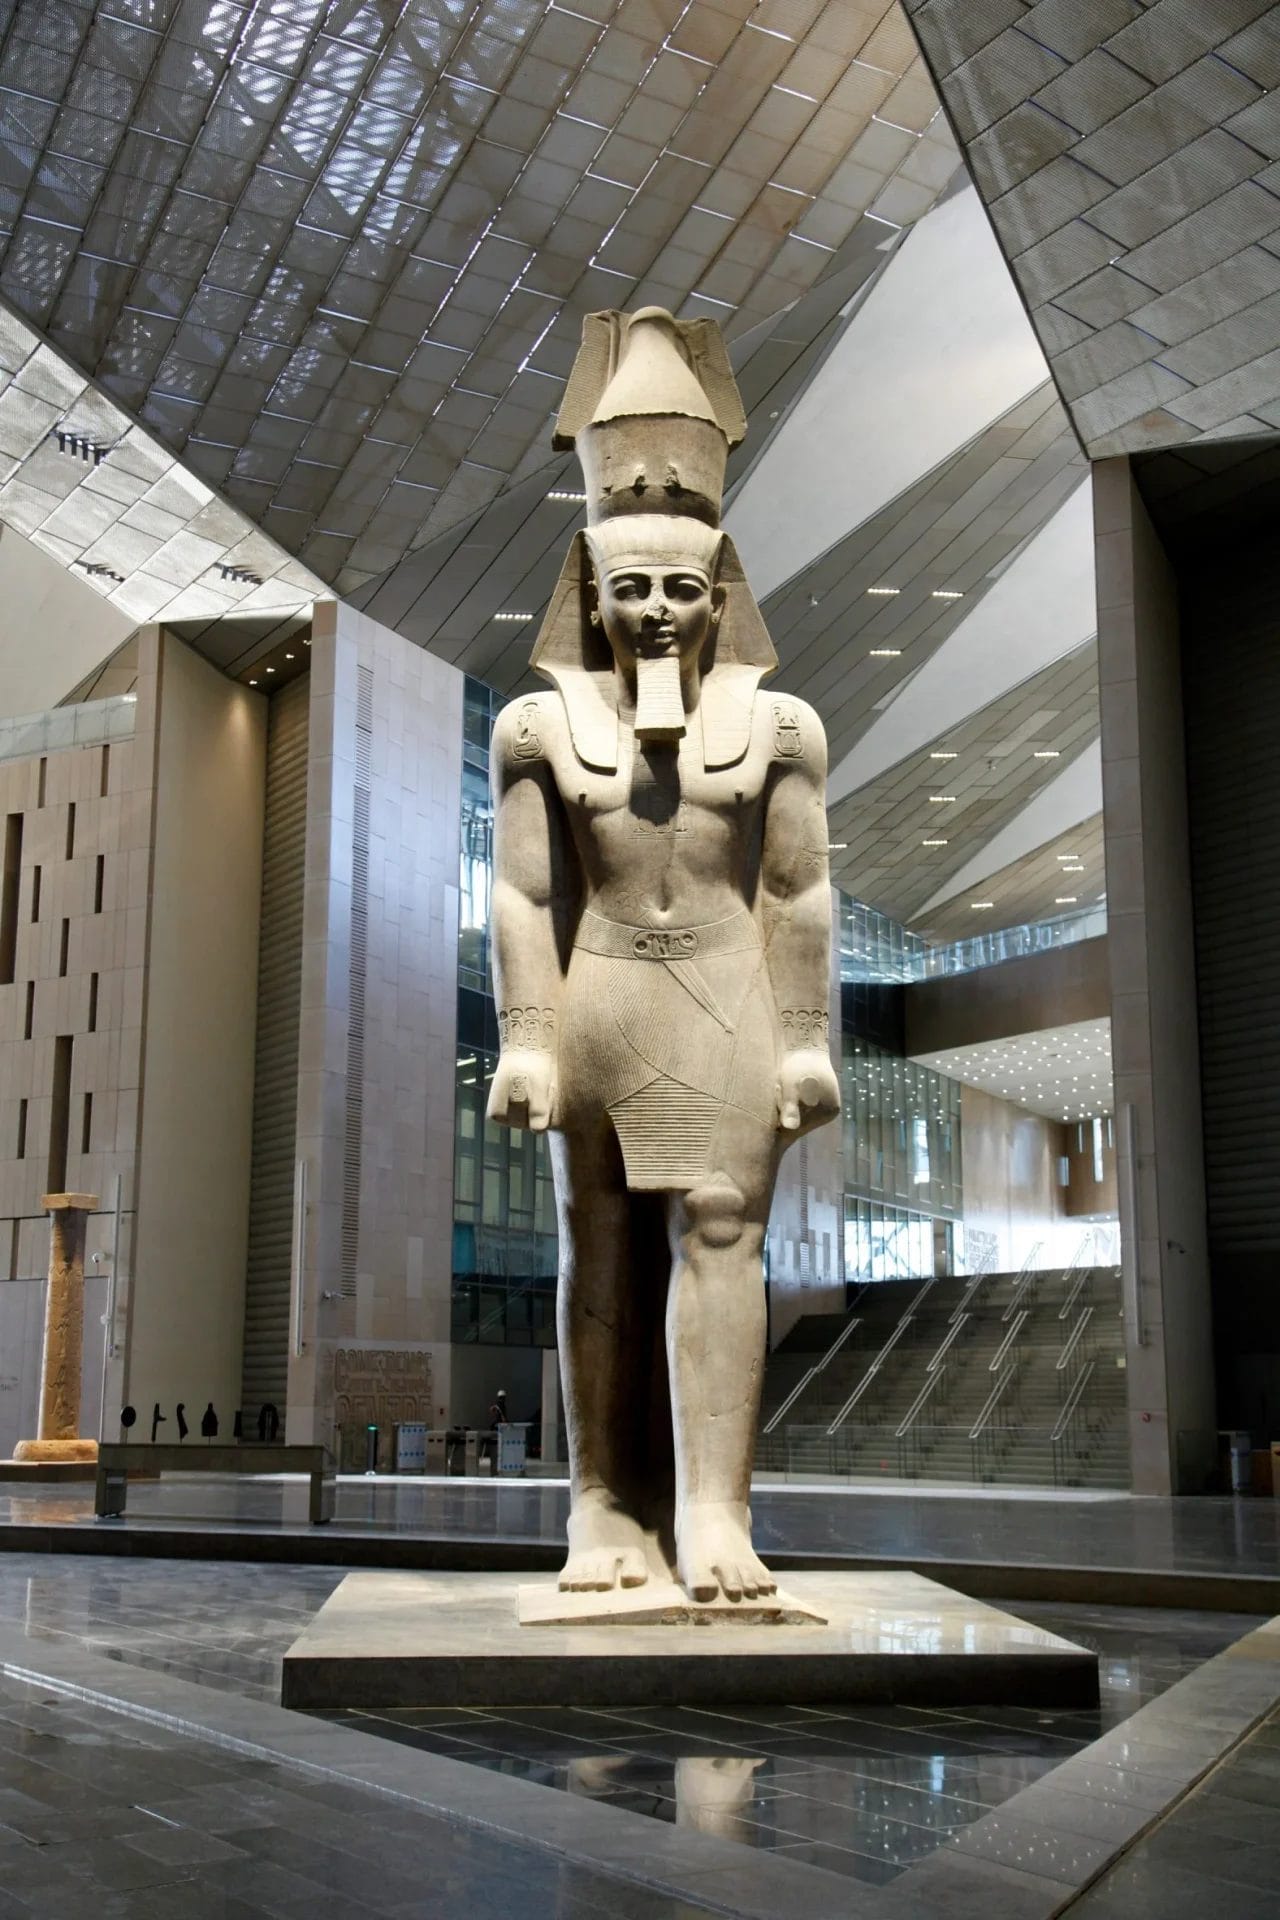 Grand Egyptian Museum